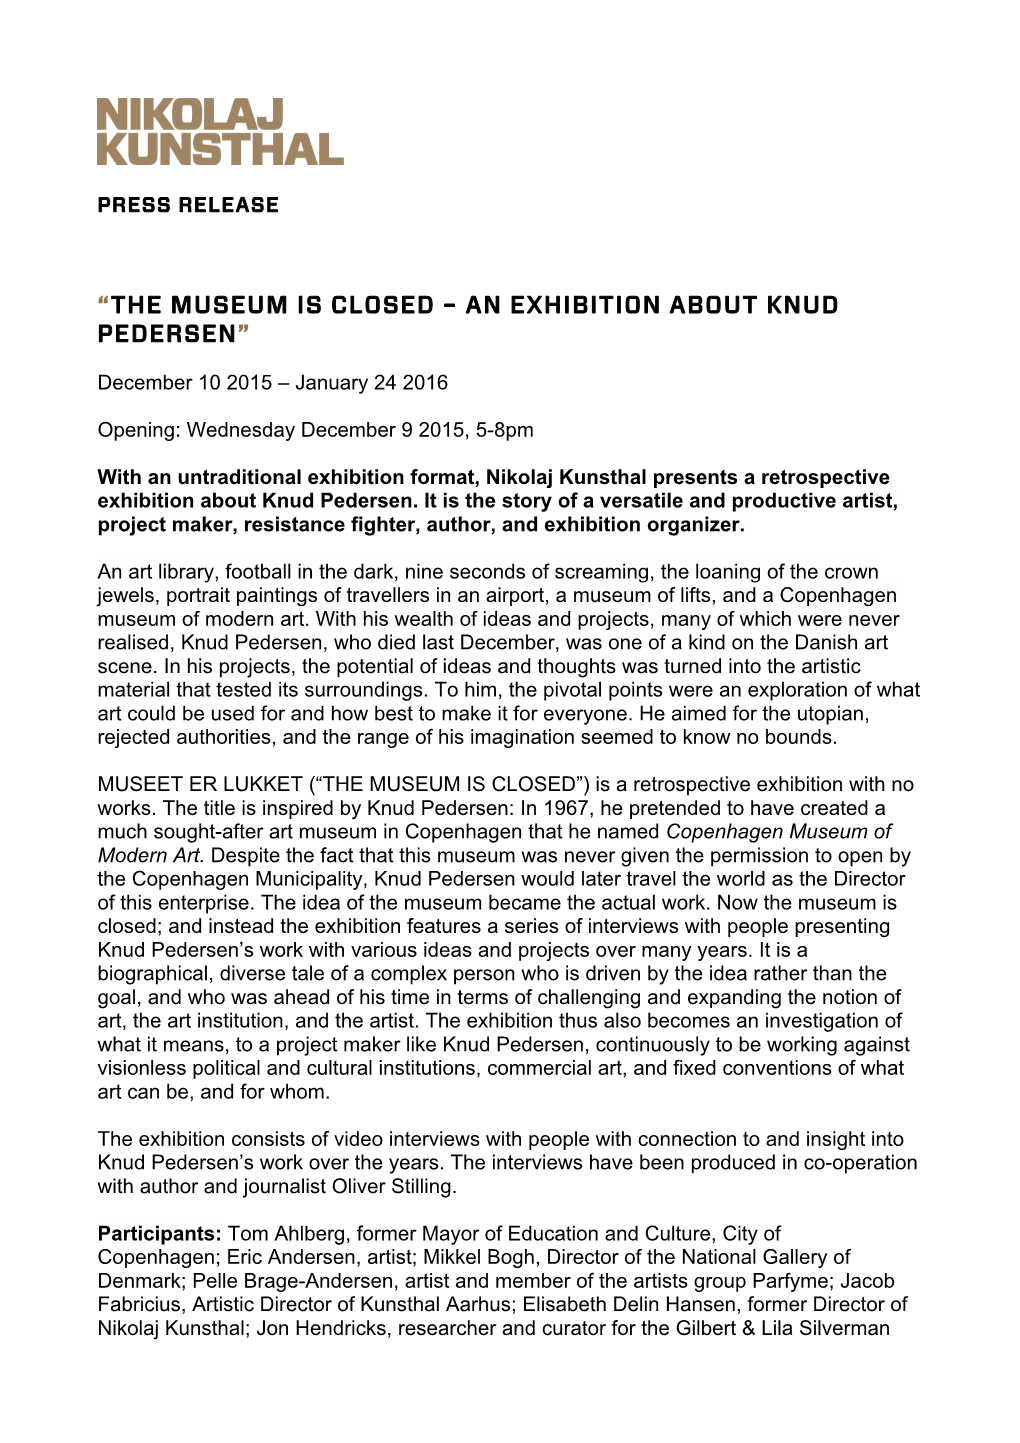 Nikolaj Kunsthal Press Release the Museum Is Closed